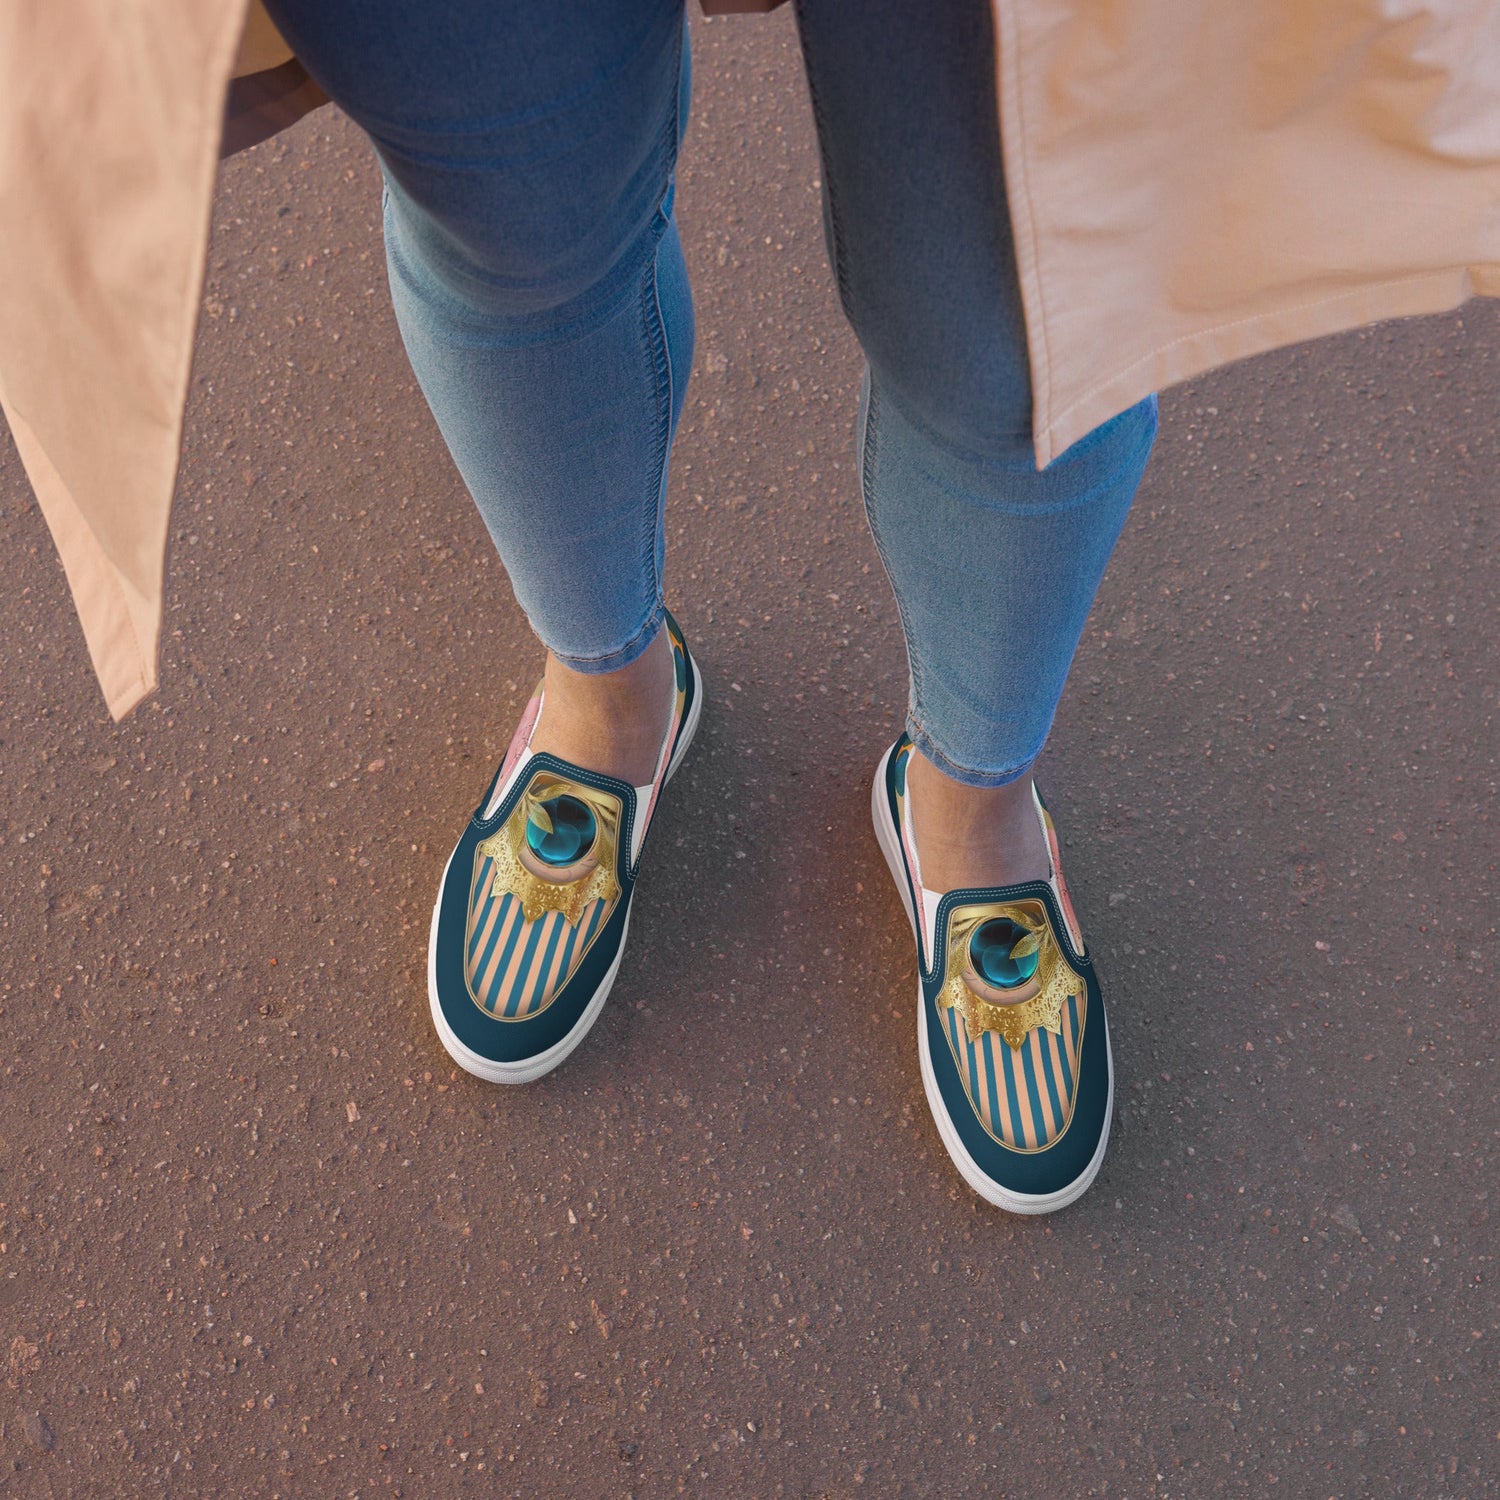 klasneakers Women’s slip-on canvas shoes - Blue Orb